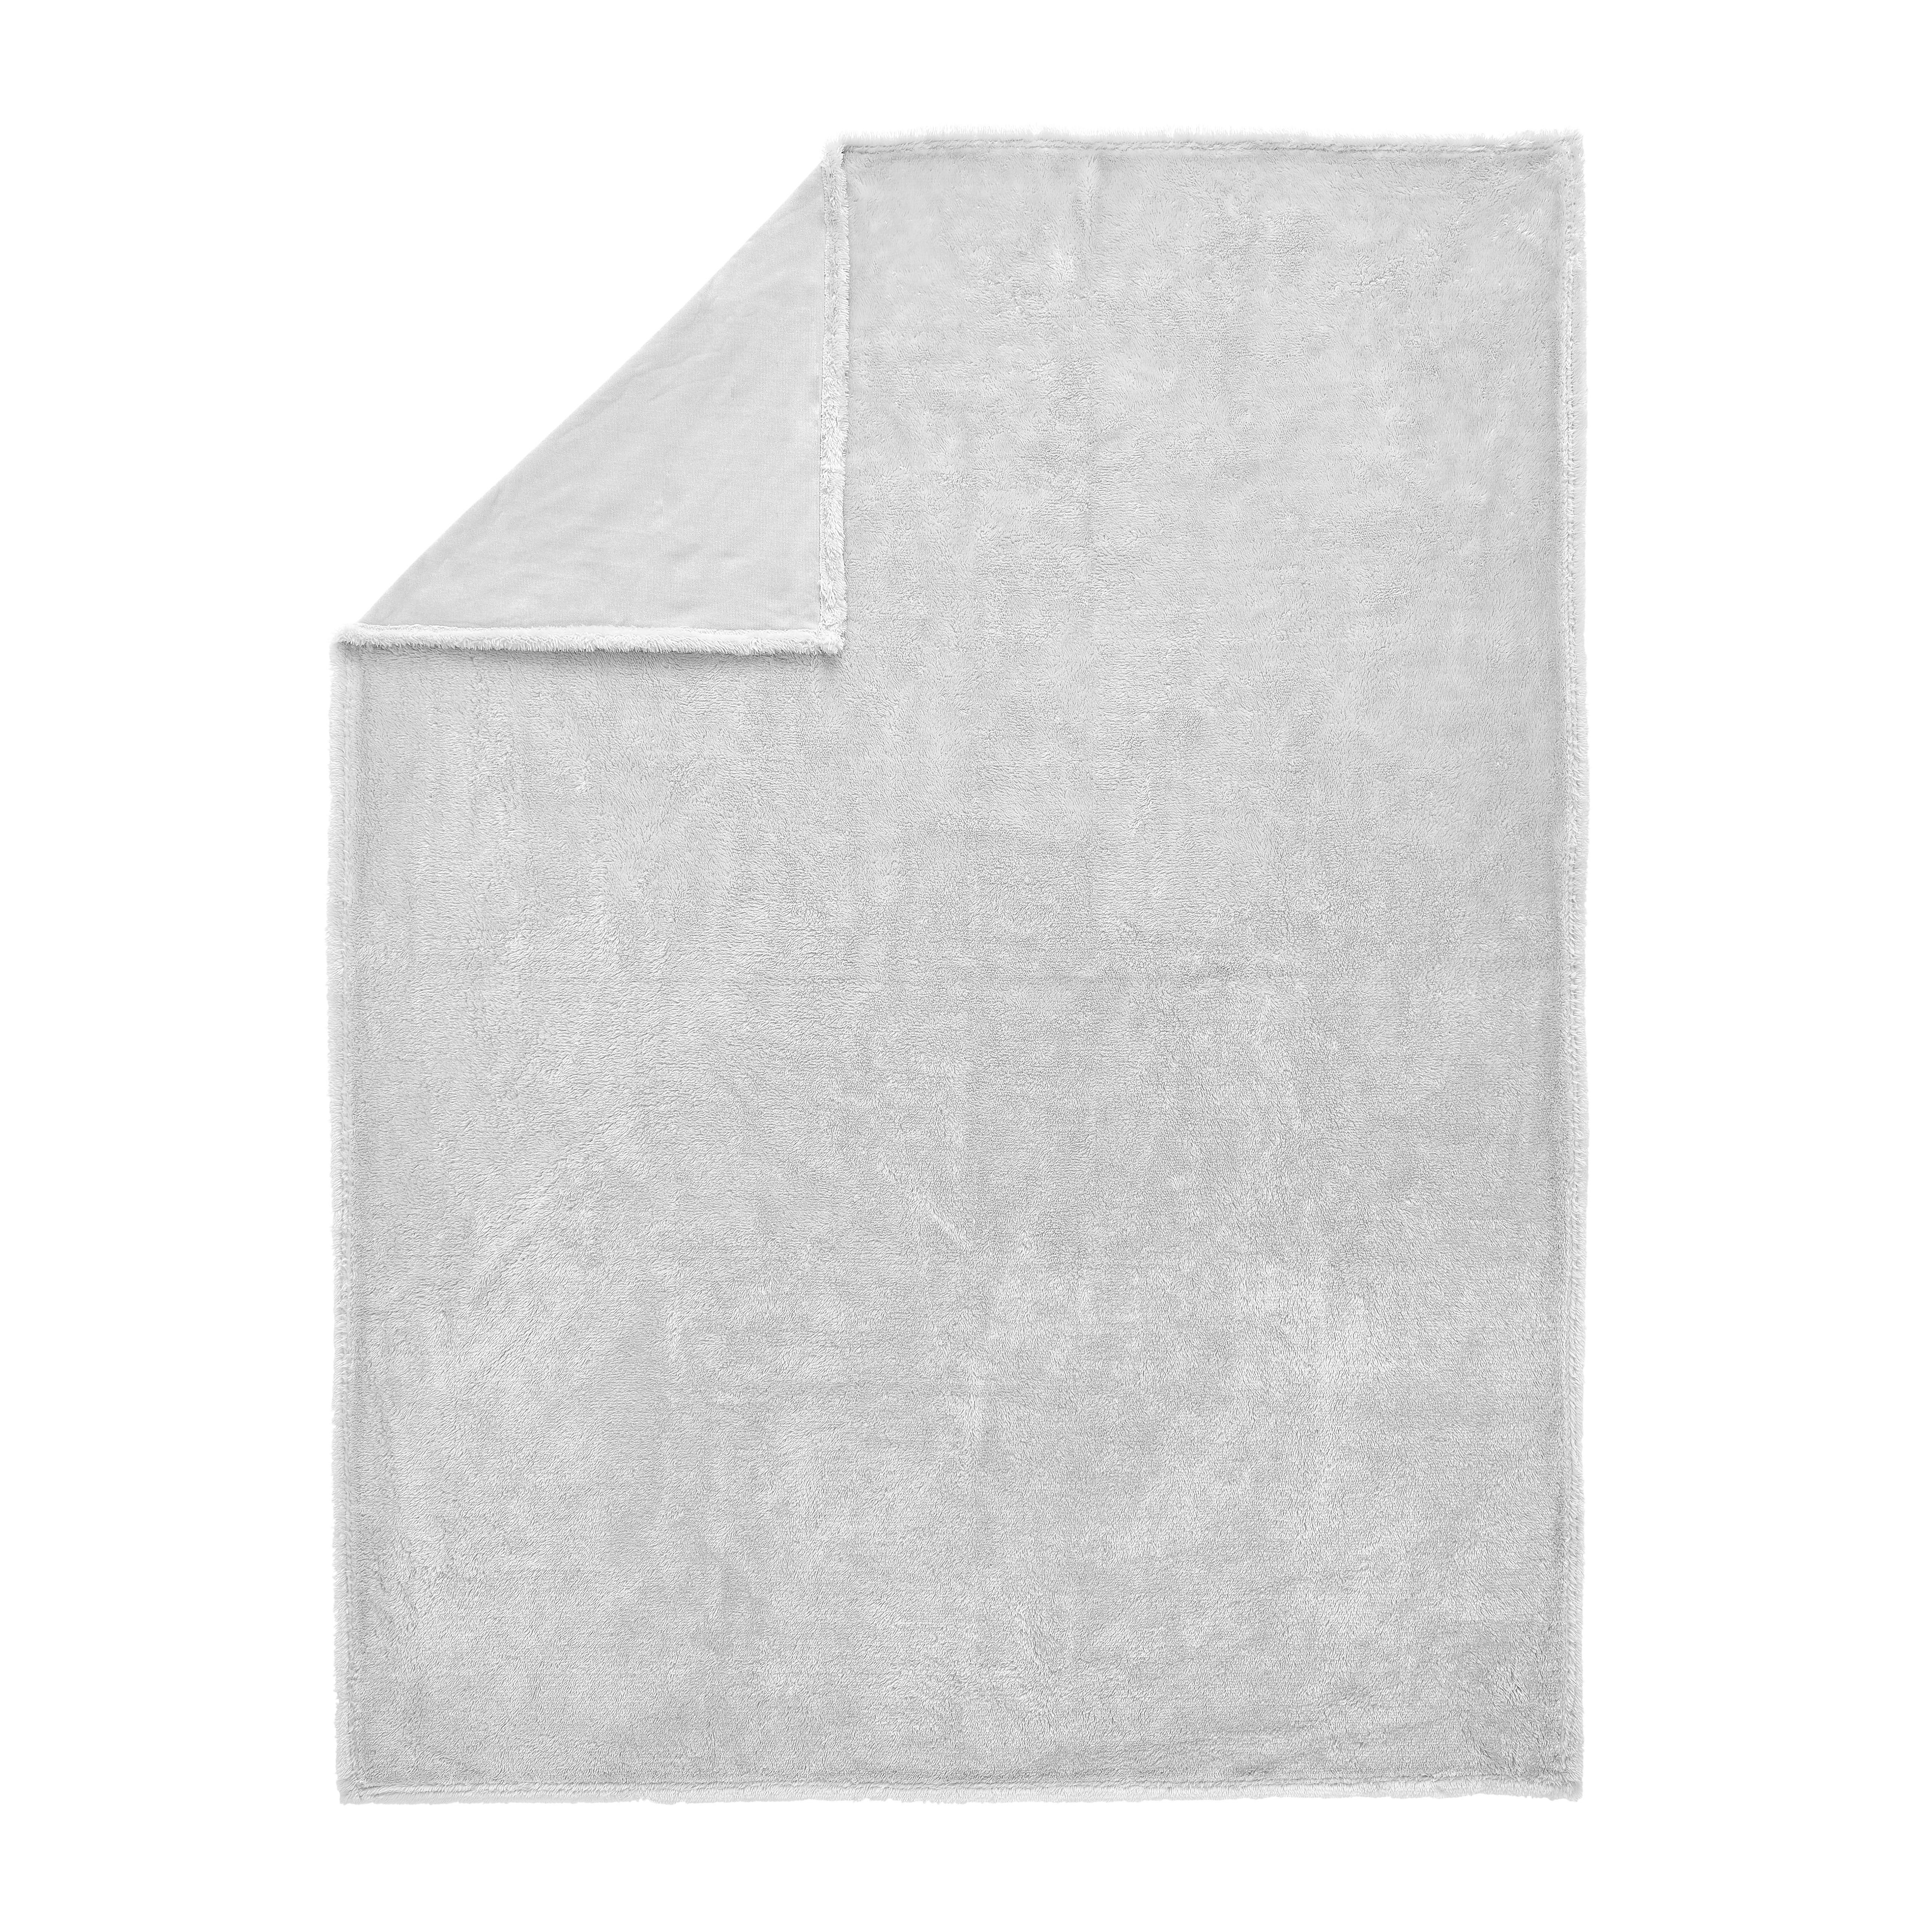 FELLDECKE Moraine 150/200 cm  - Silberfarben, KONVENTIONELL, Textil (150/200cm) - Novel